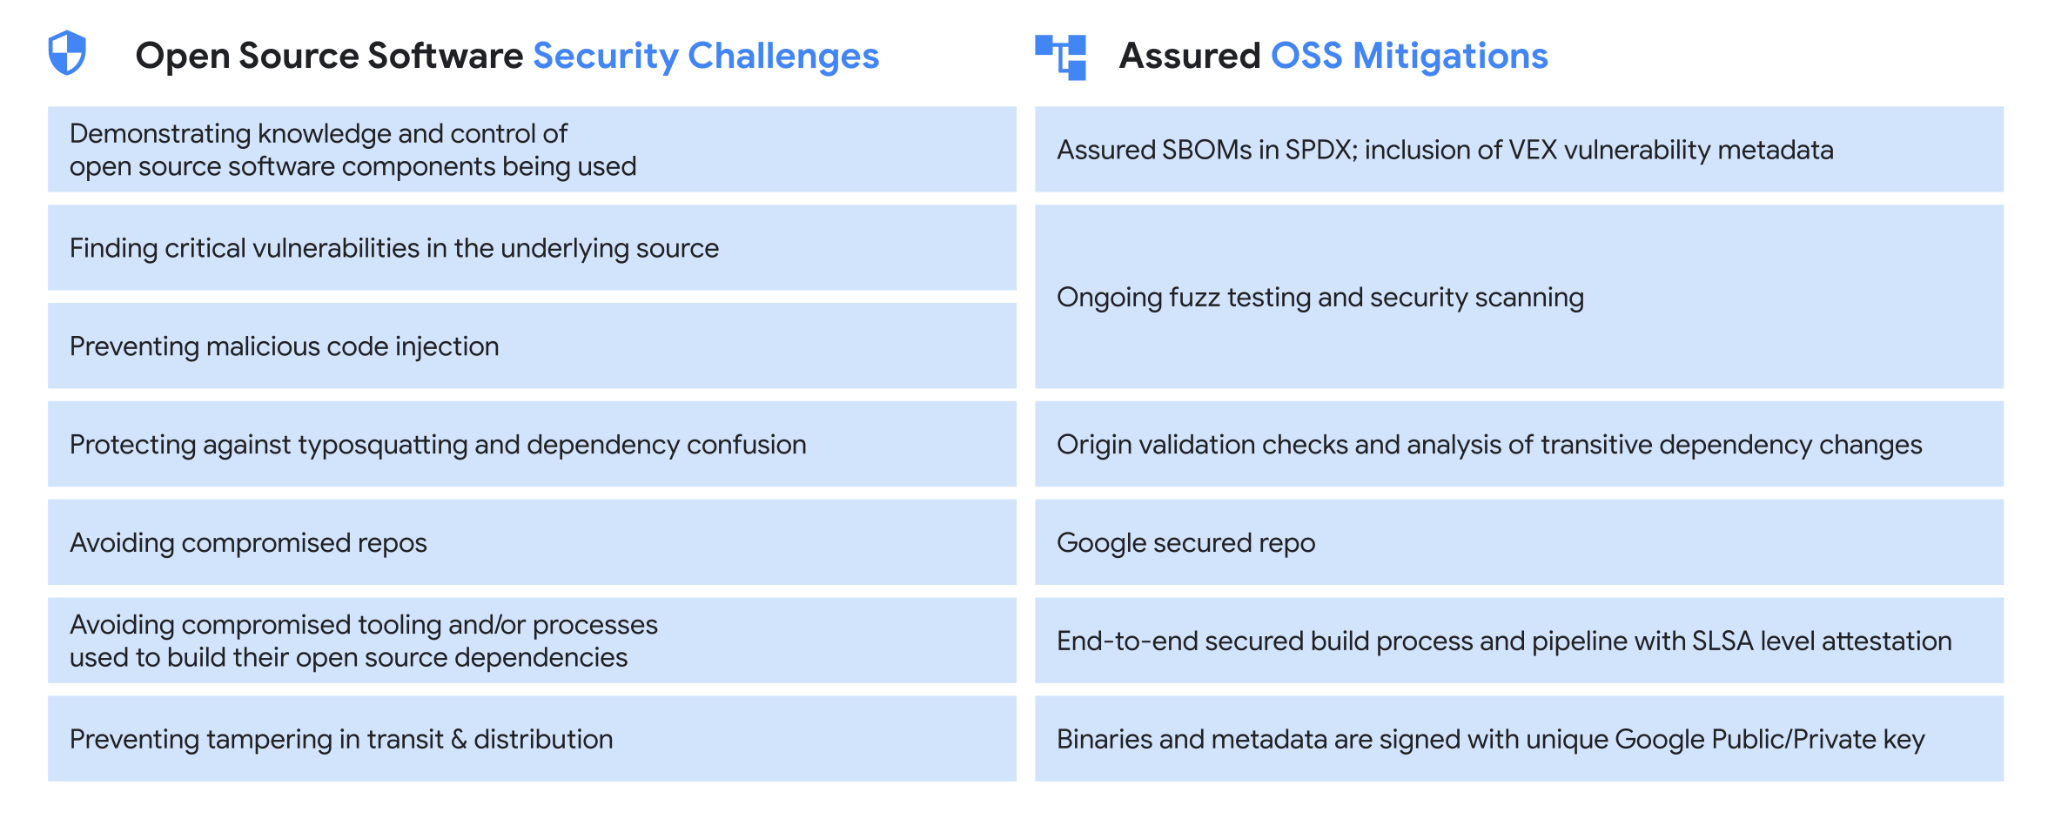 جدول Google Assured OSS